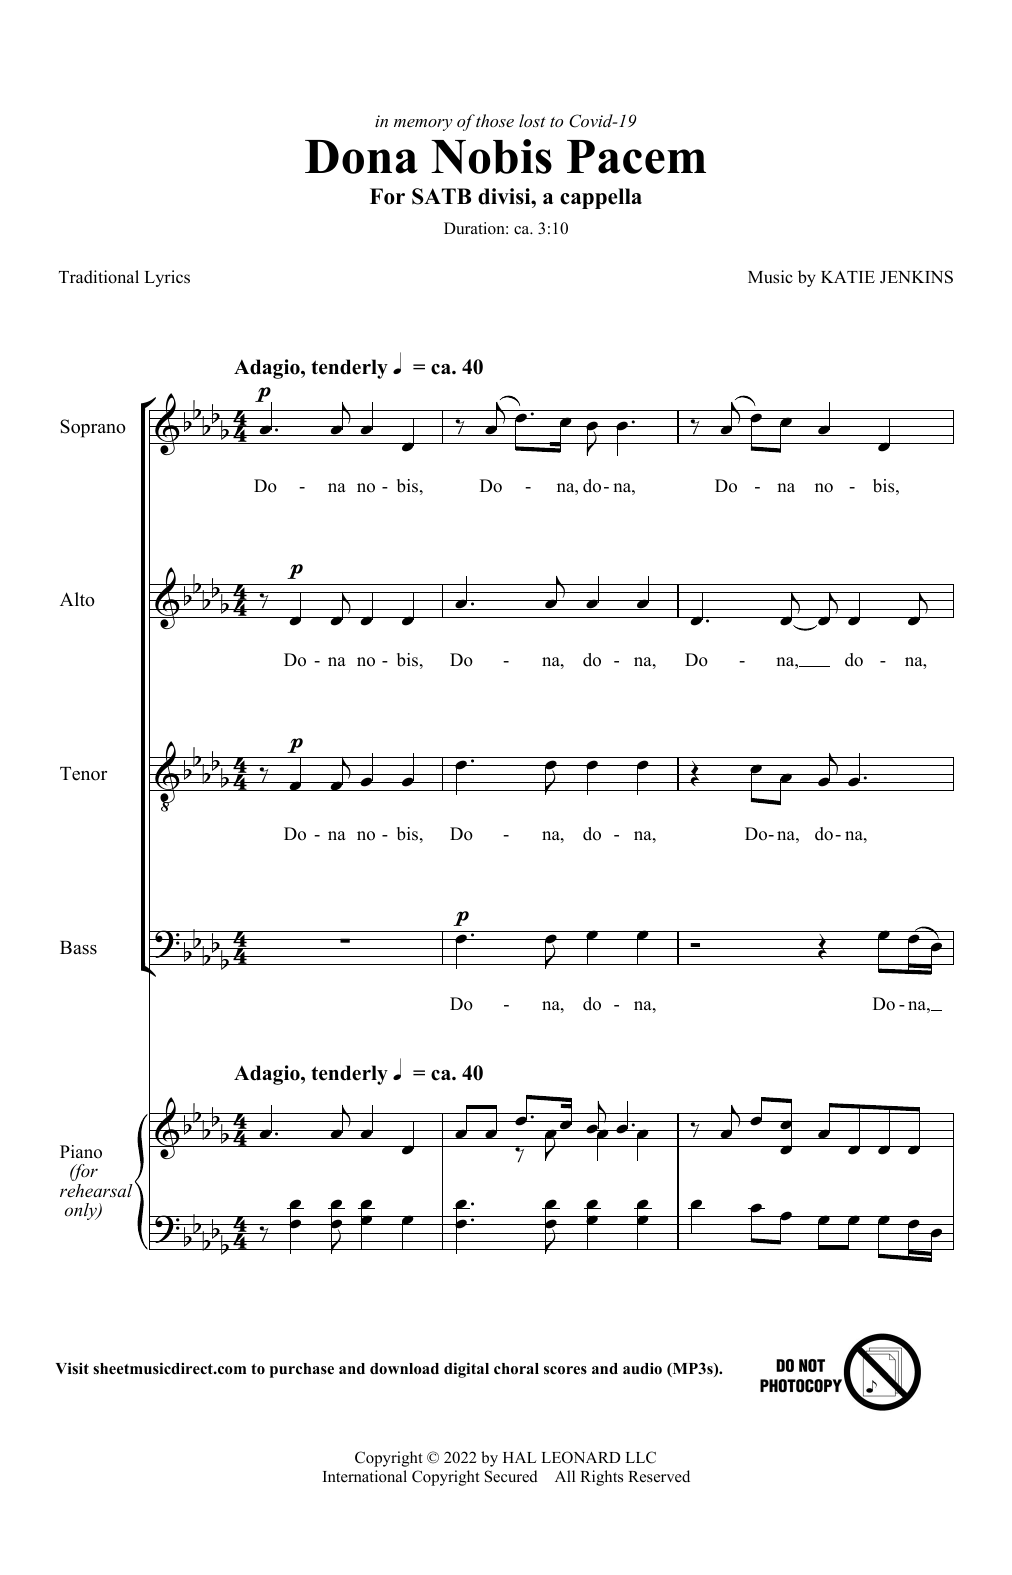 Katie Jenkins Dona Nobis Pacem Sheet Music Notes & Chords for SATB Choir - Download or Print PDF